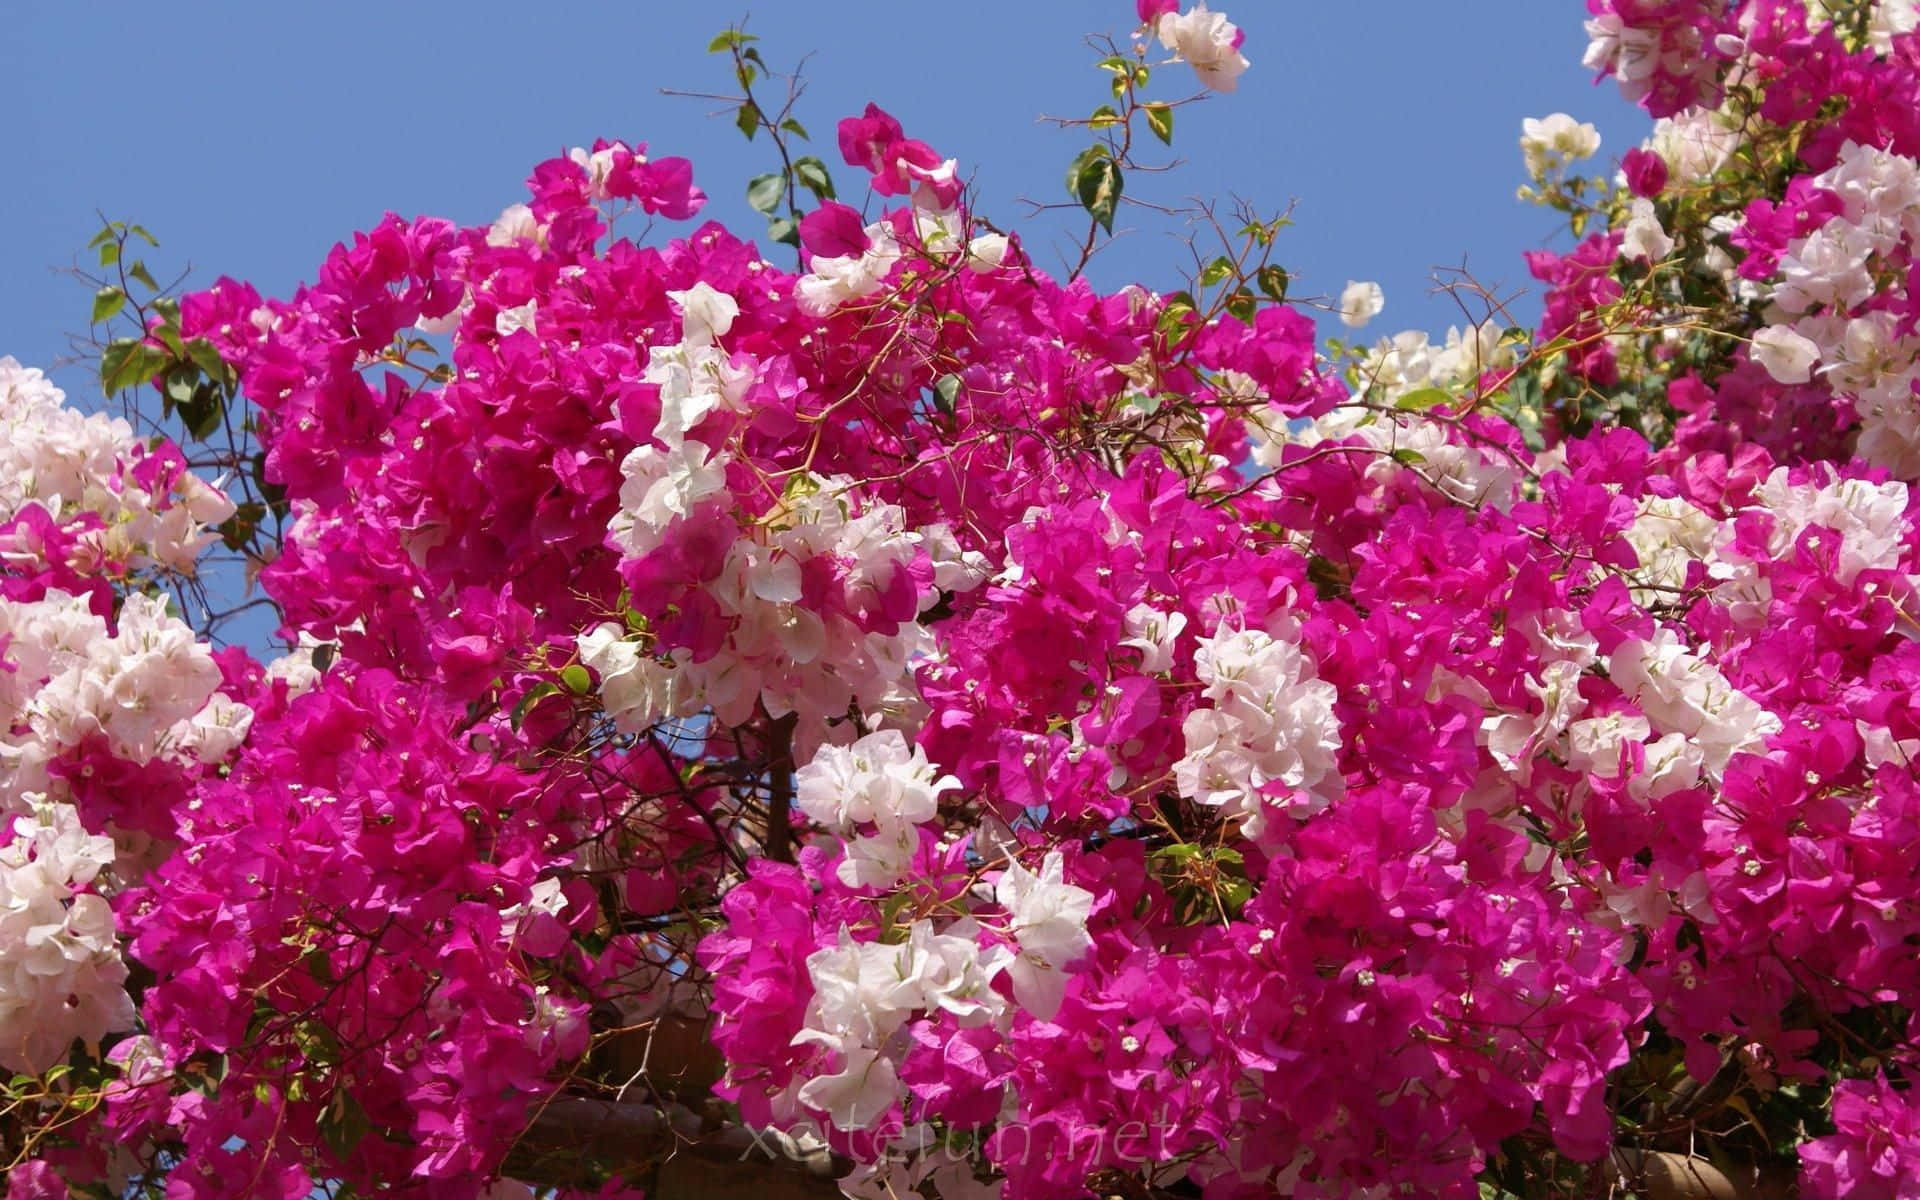 bougainvillea - a beautiful flowering tree